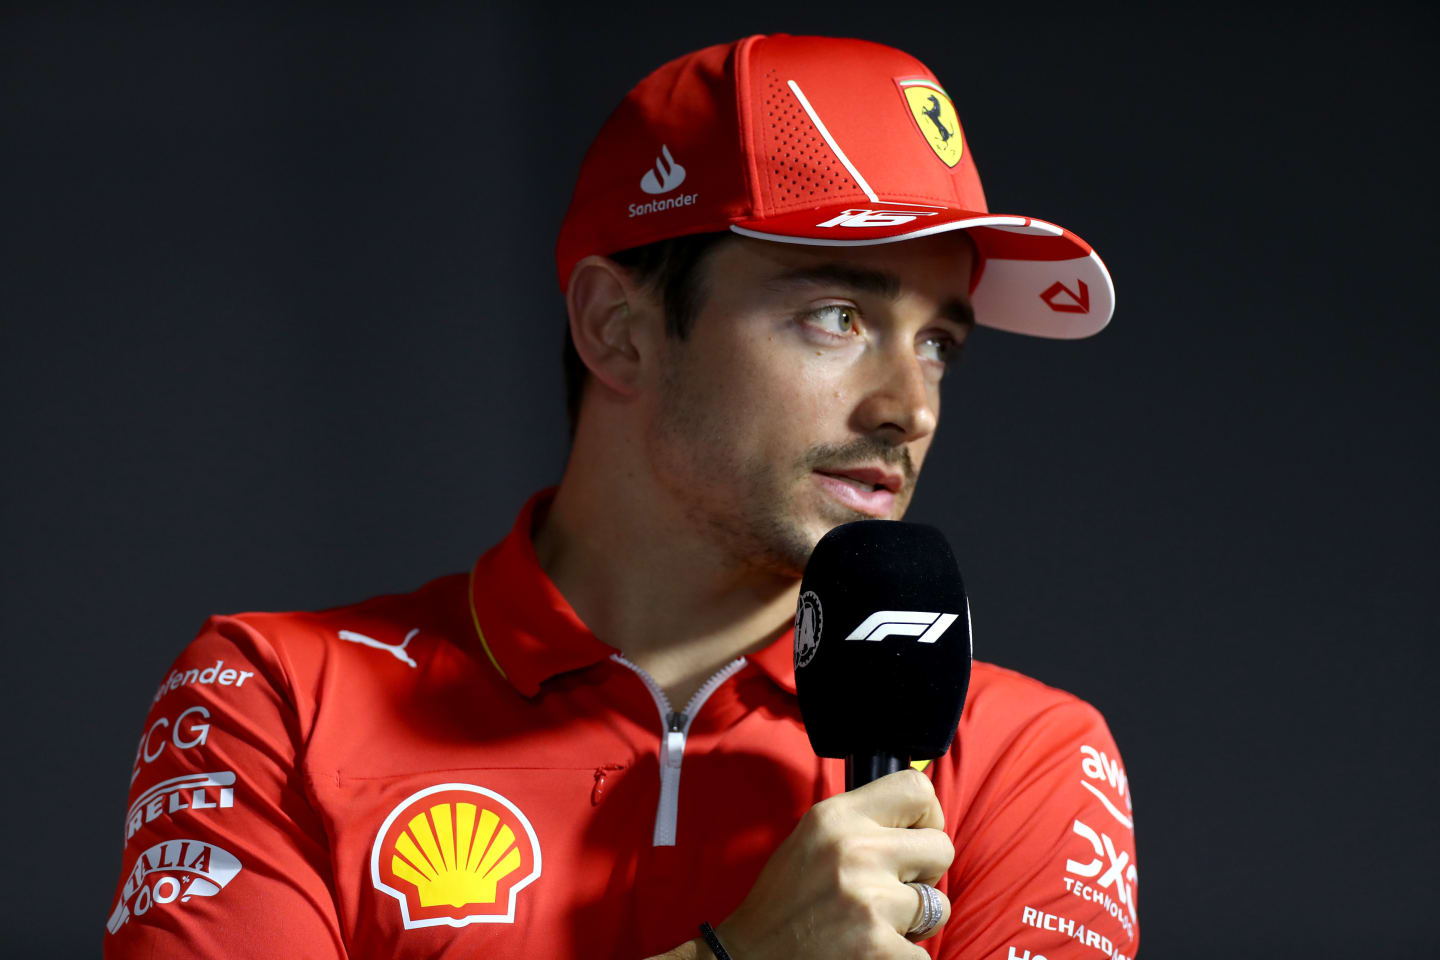 JEDDAH, SAUDI ARABIA - MARCH 06: Charles Leclerc of Monaco and Ferrari attends the Drivers Press